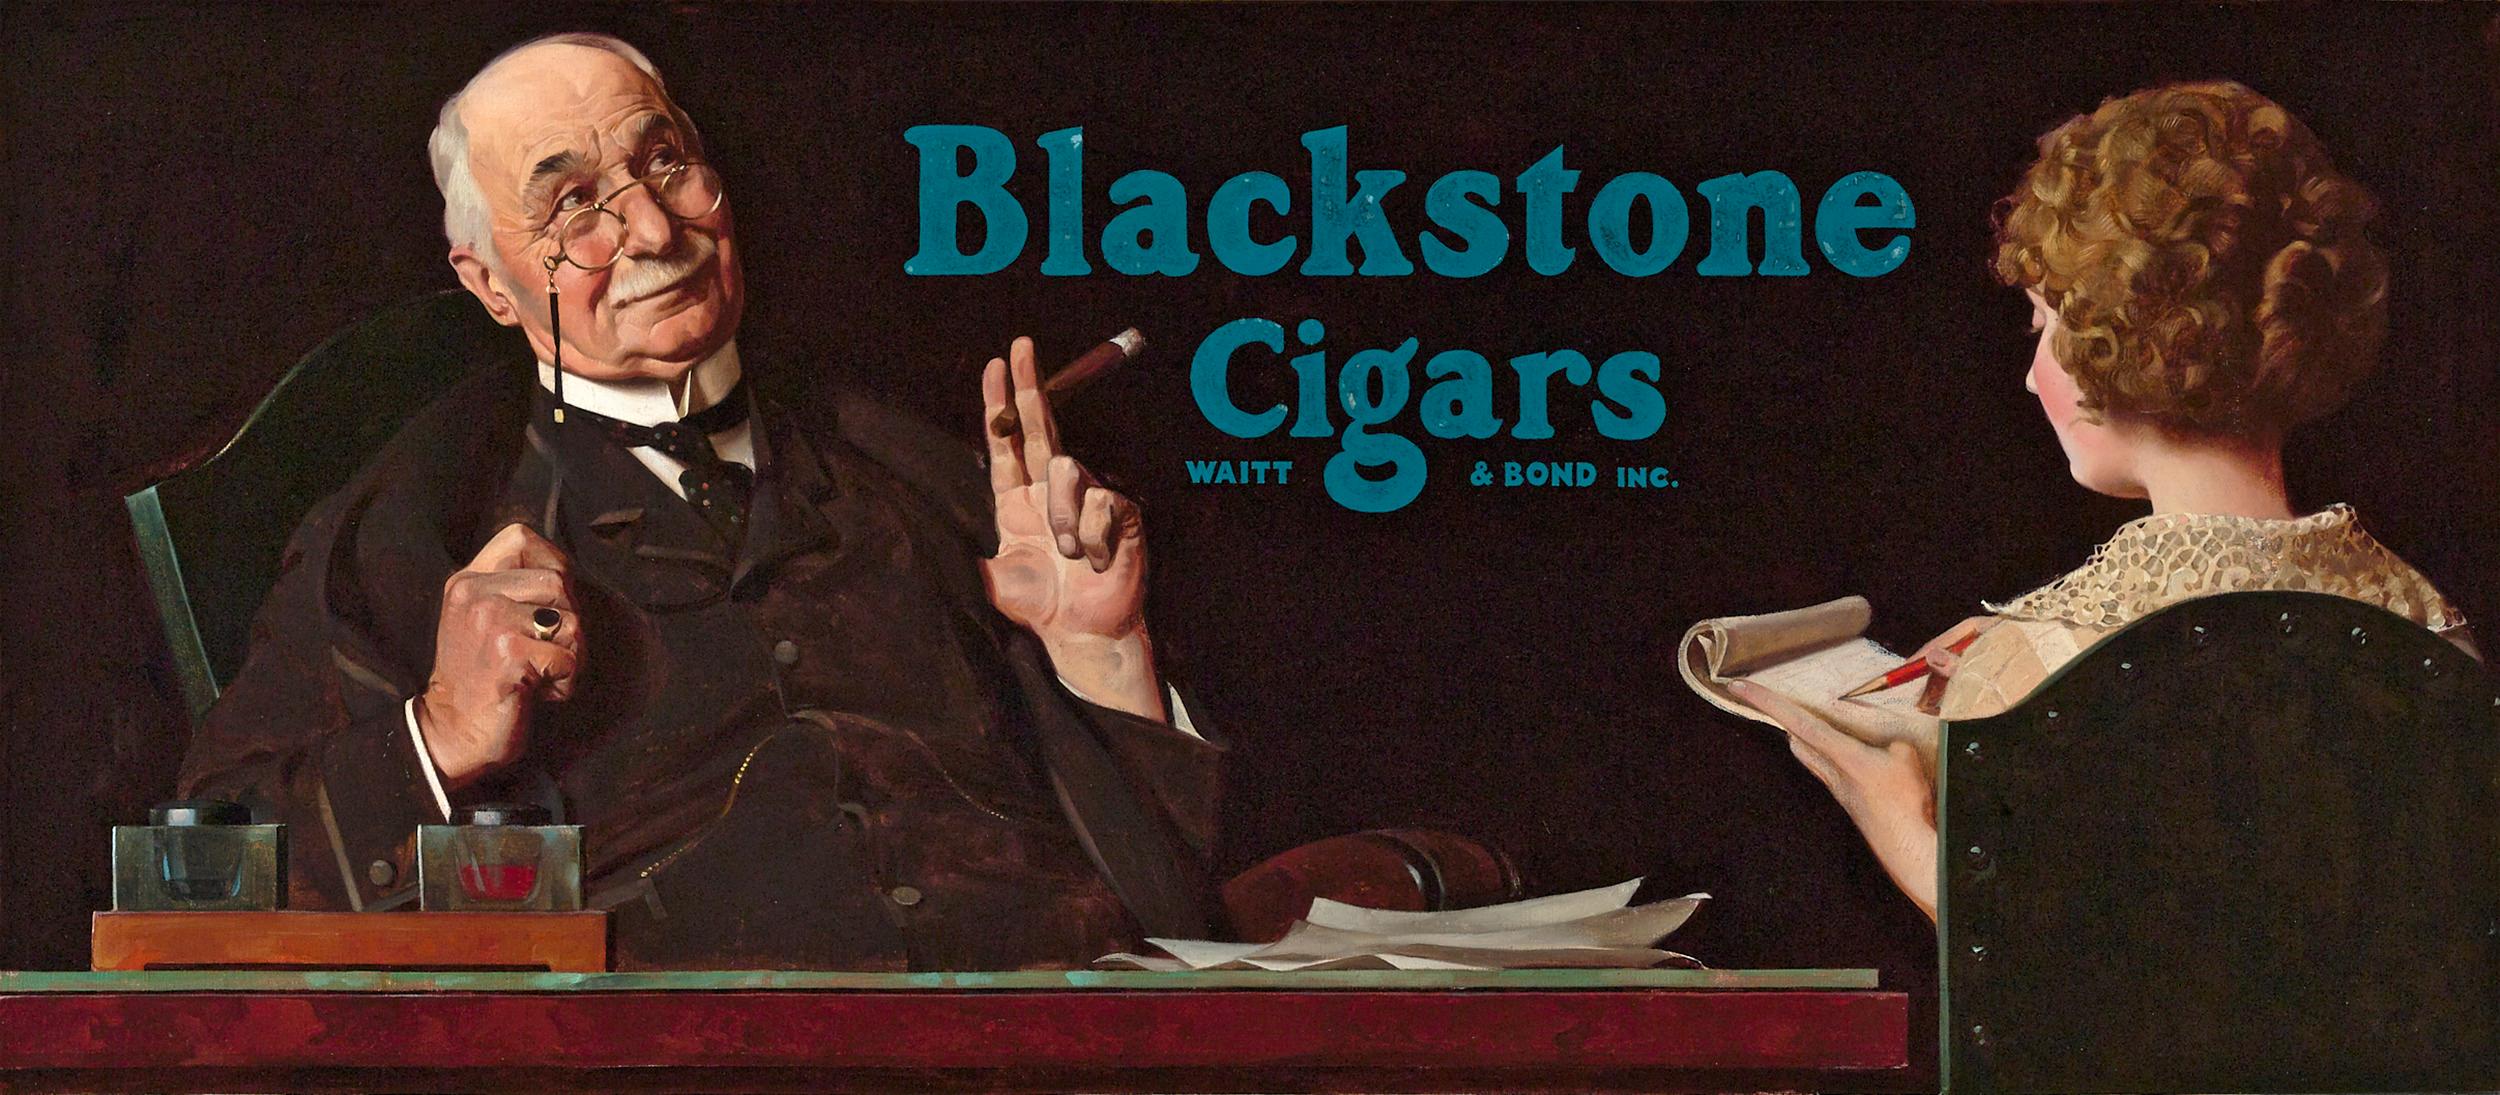 Blackstone Zigarren